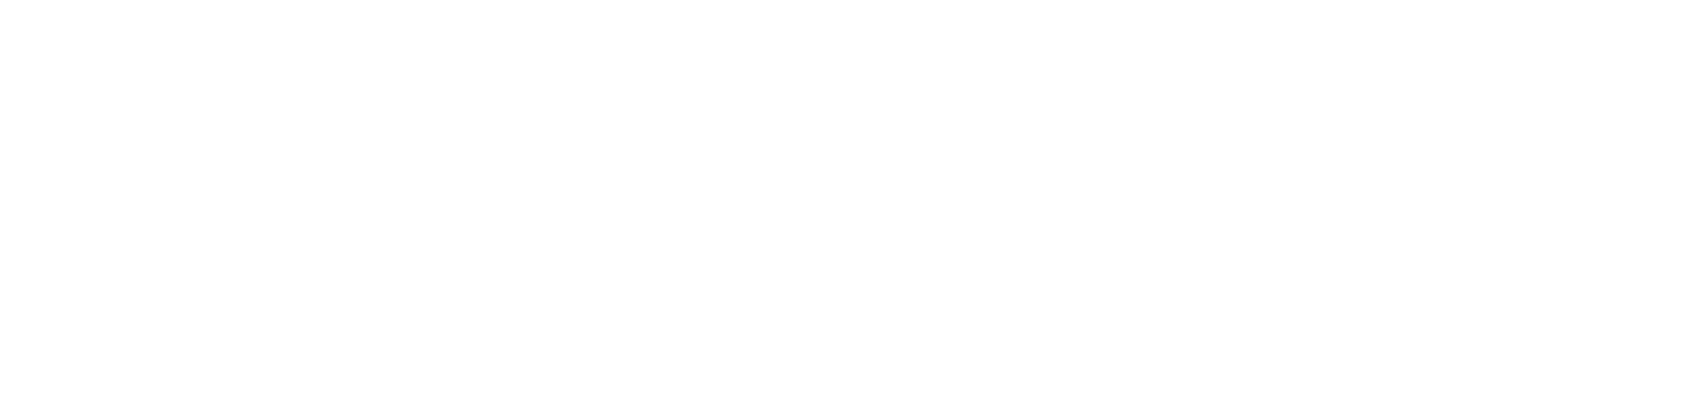 Botón de Paypal